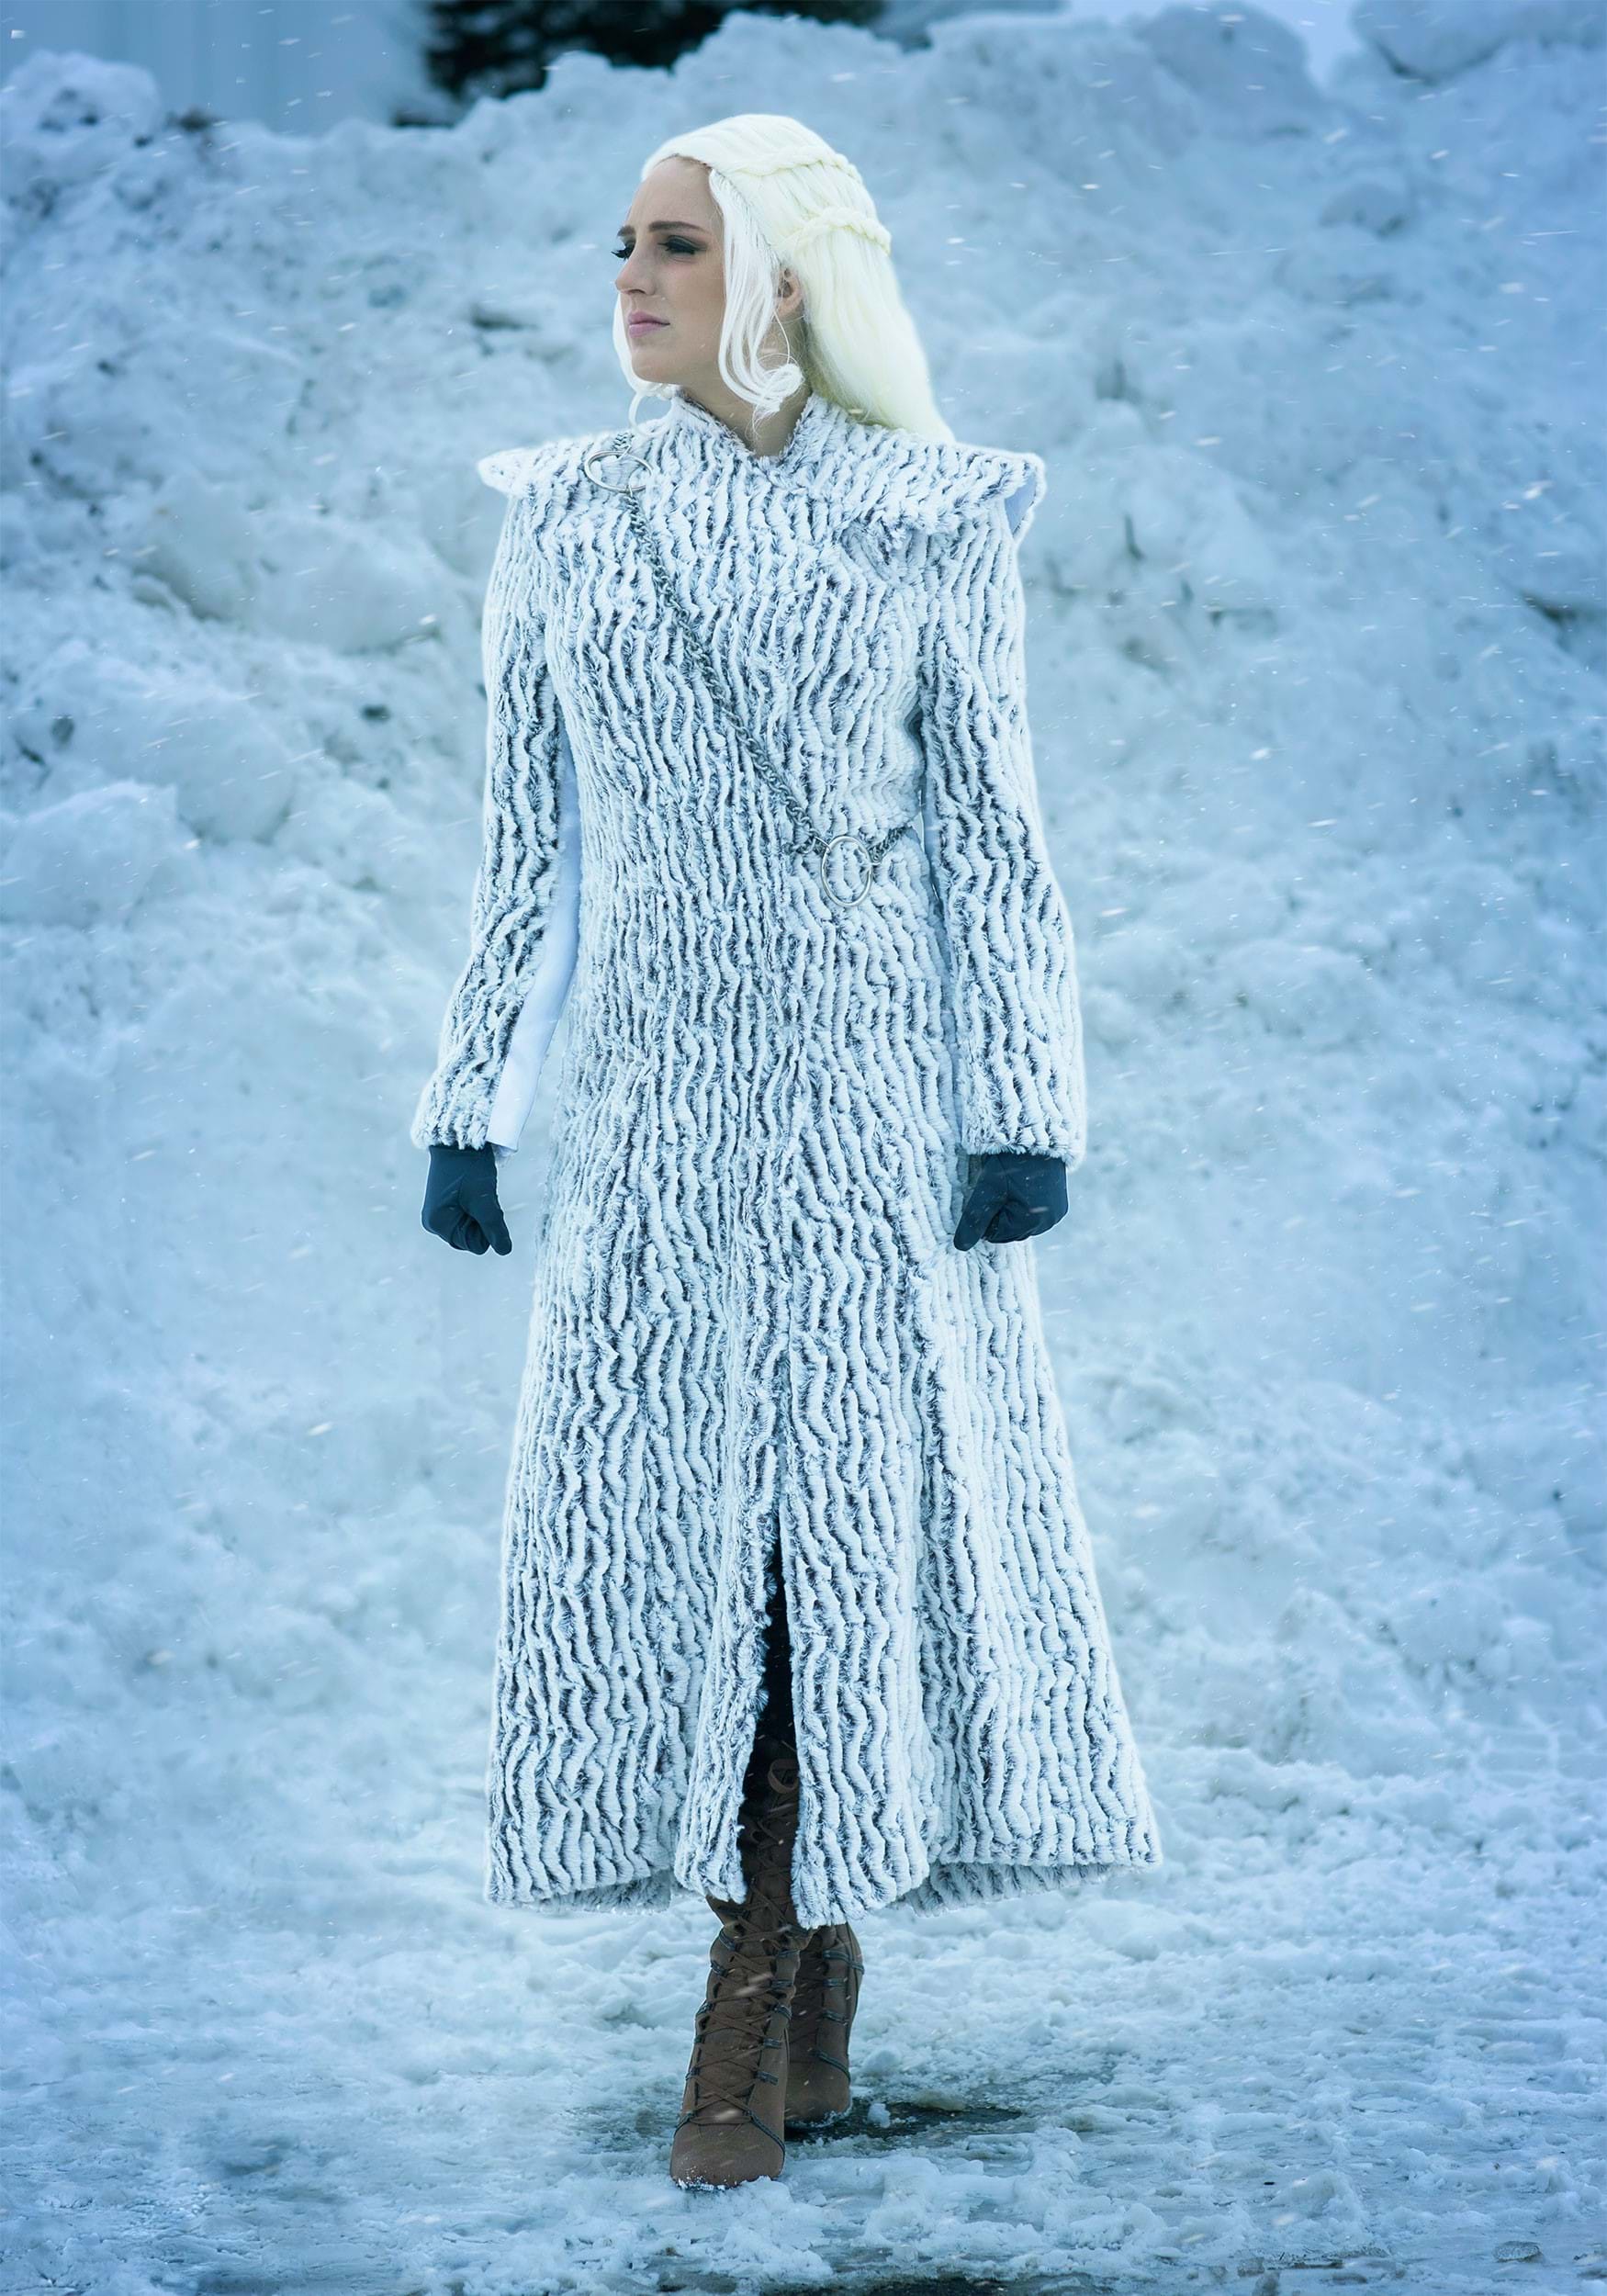 Winter Dragon Queen Fancy Dress Costume For Women